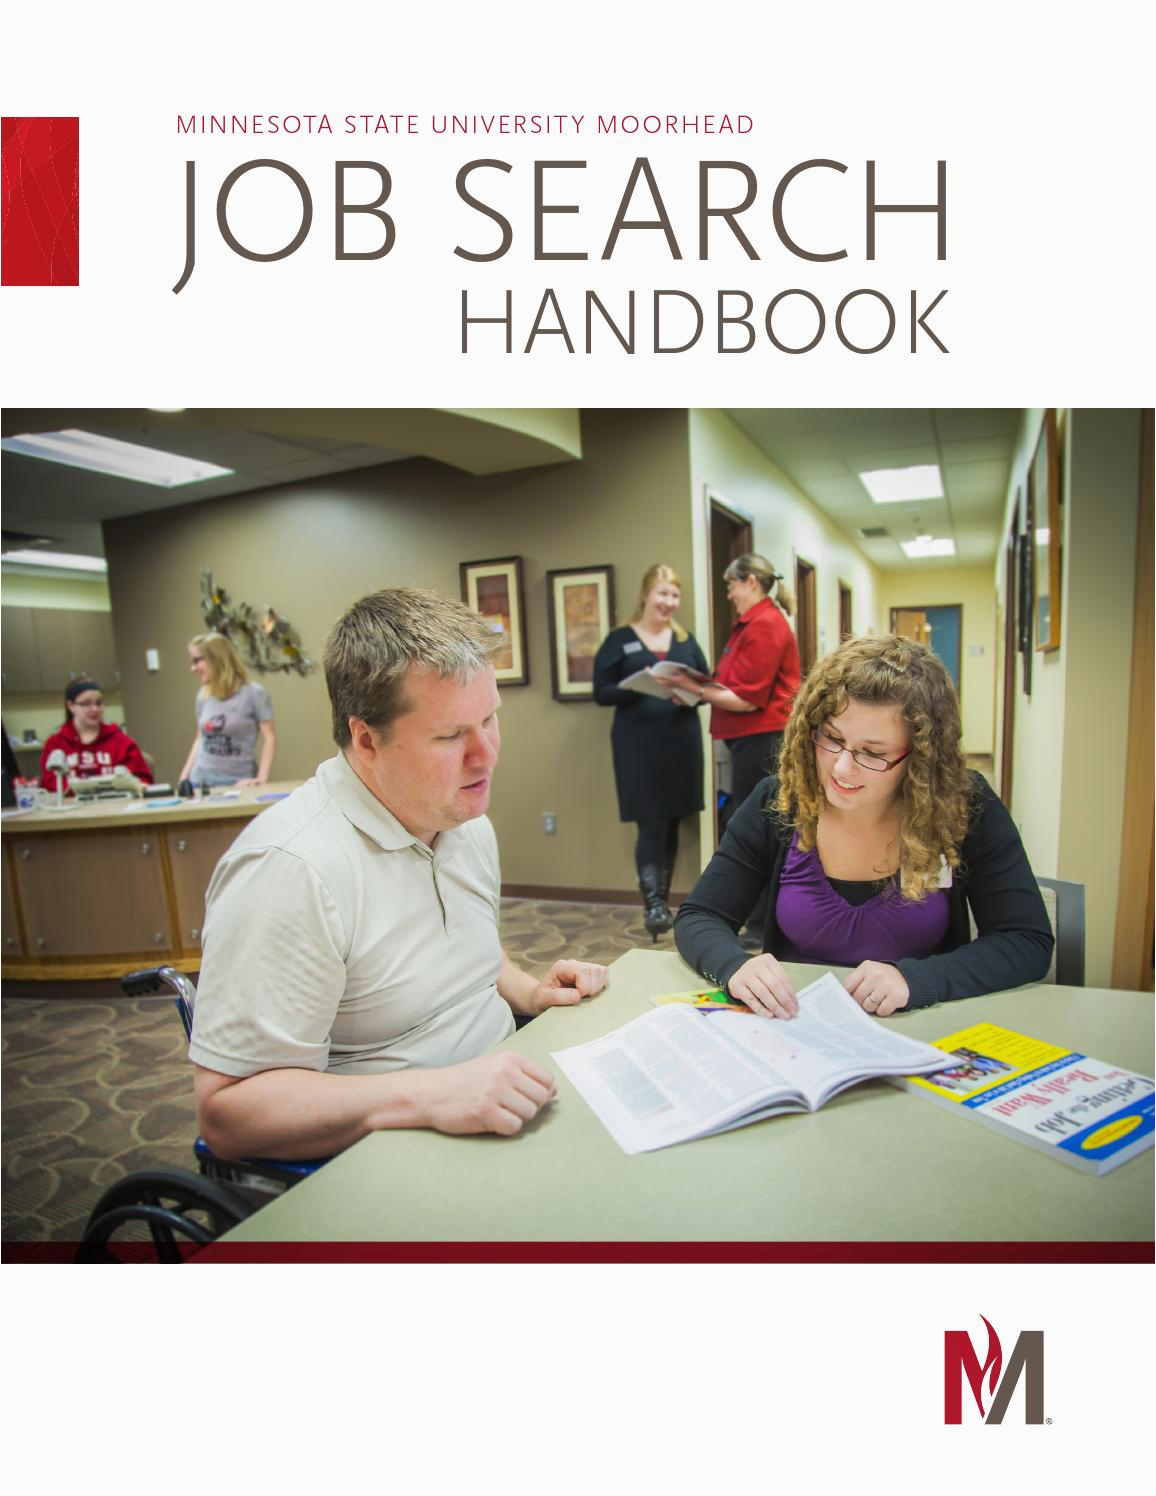 Msum Career Development Center Resume Sample Job Search Handbook by Msu Moorhead issuu